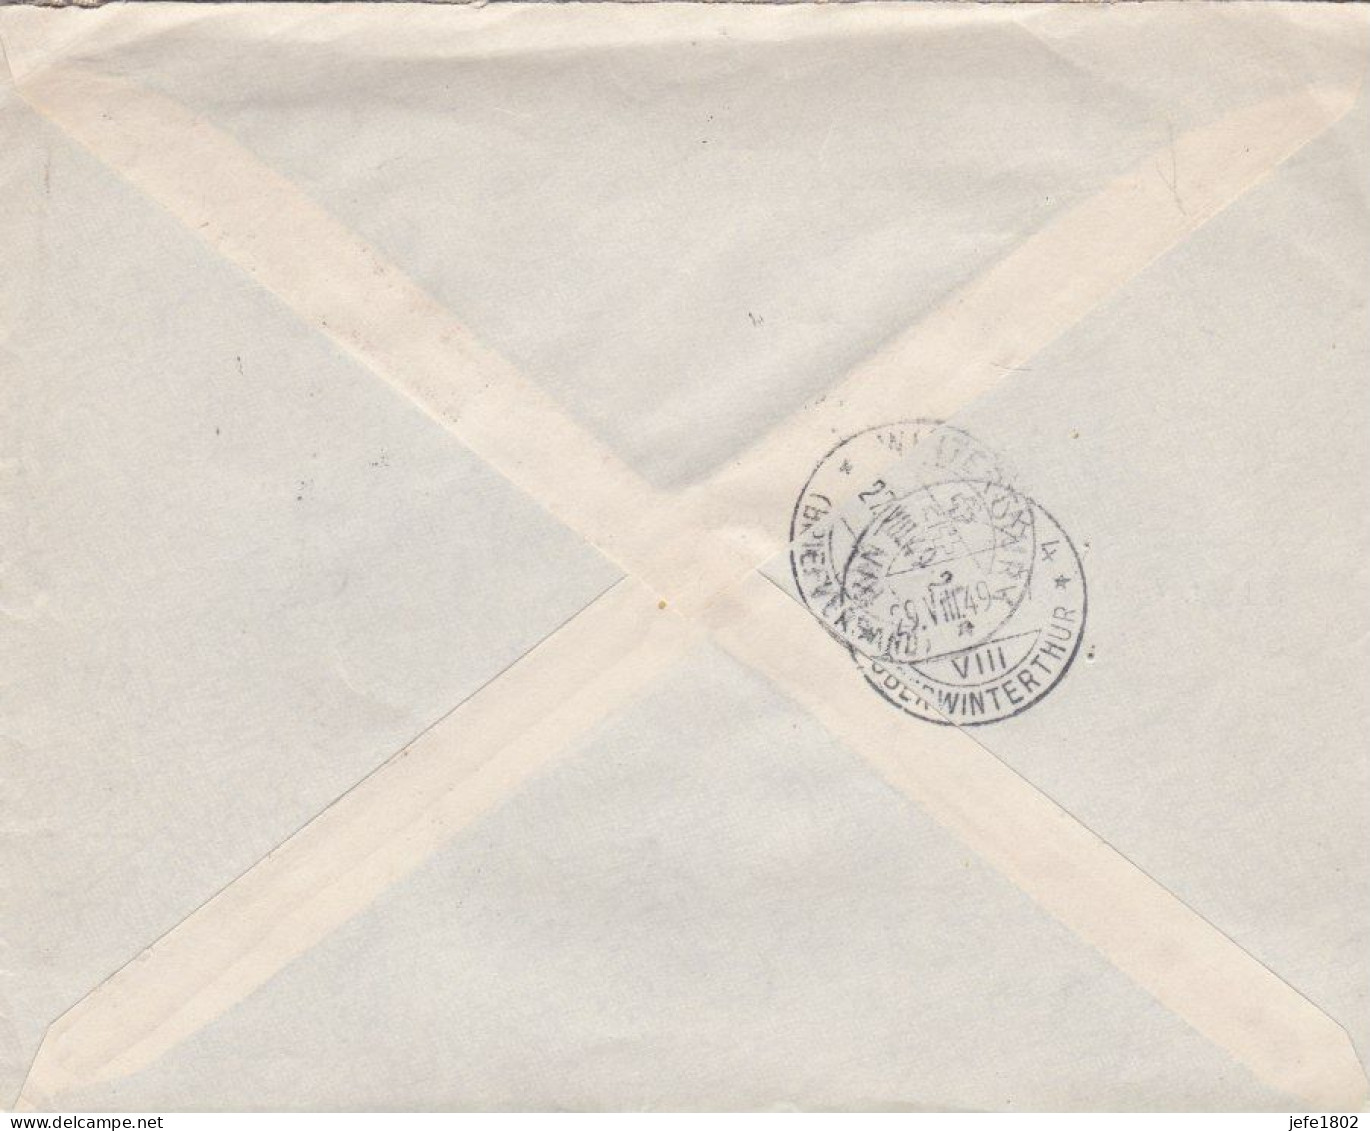 HEKLA 1947 On Registered Mail From Reykjavik To Winterthur - Switzerland (Schweiz) - Covers & Documents